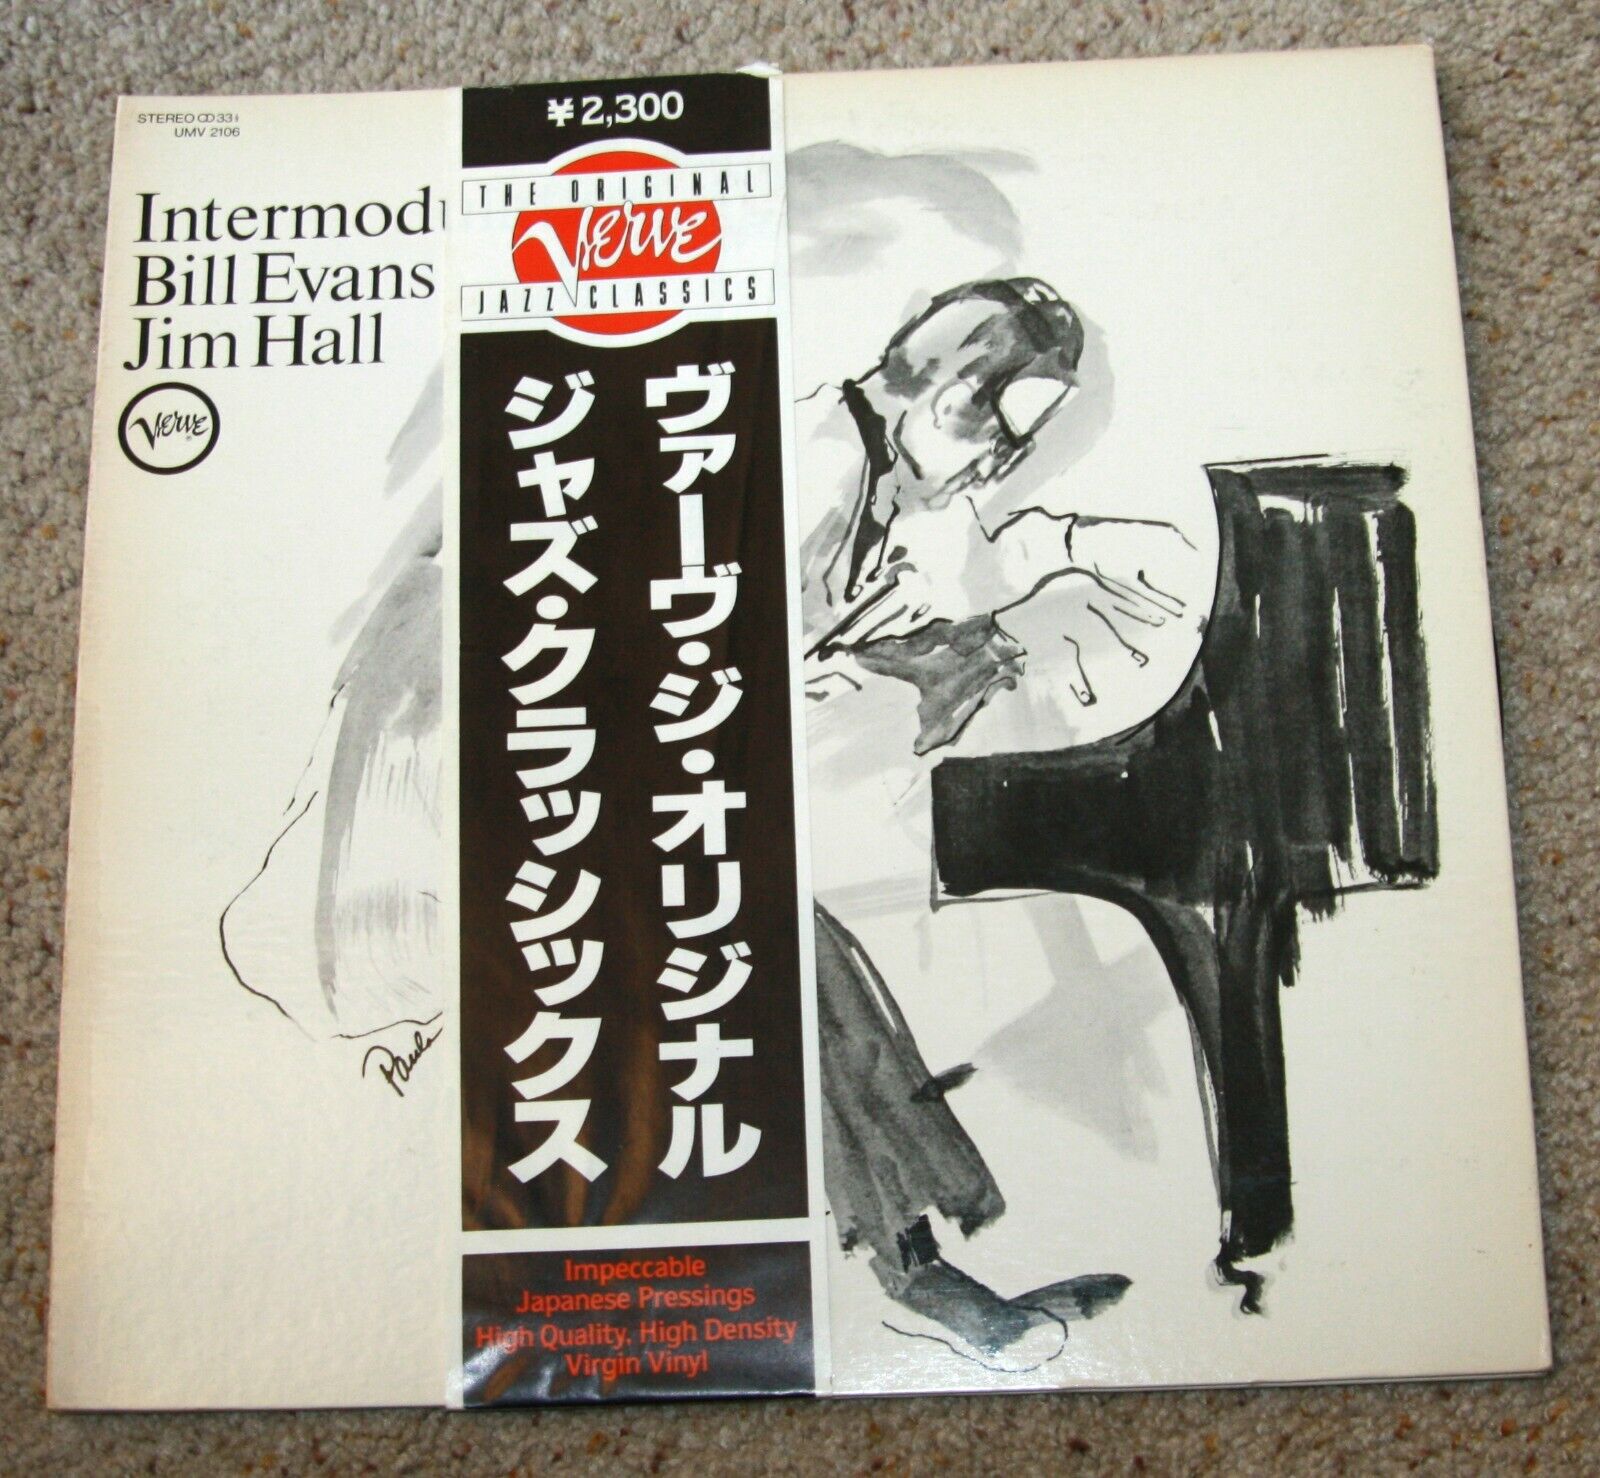 Intermodulation Bill Evans Jim Hall Verve vintage vinyl jazz Japanese Pressing